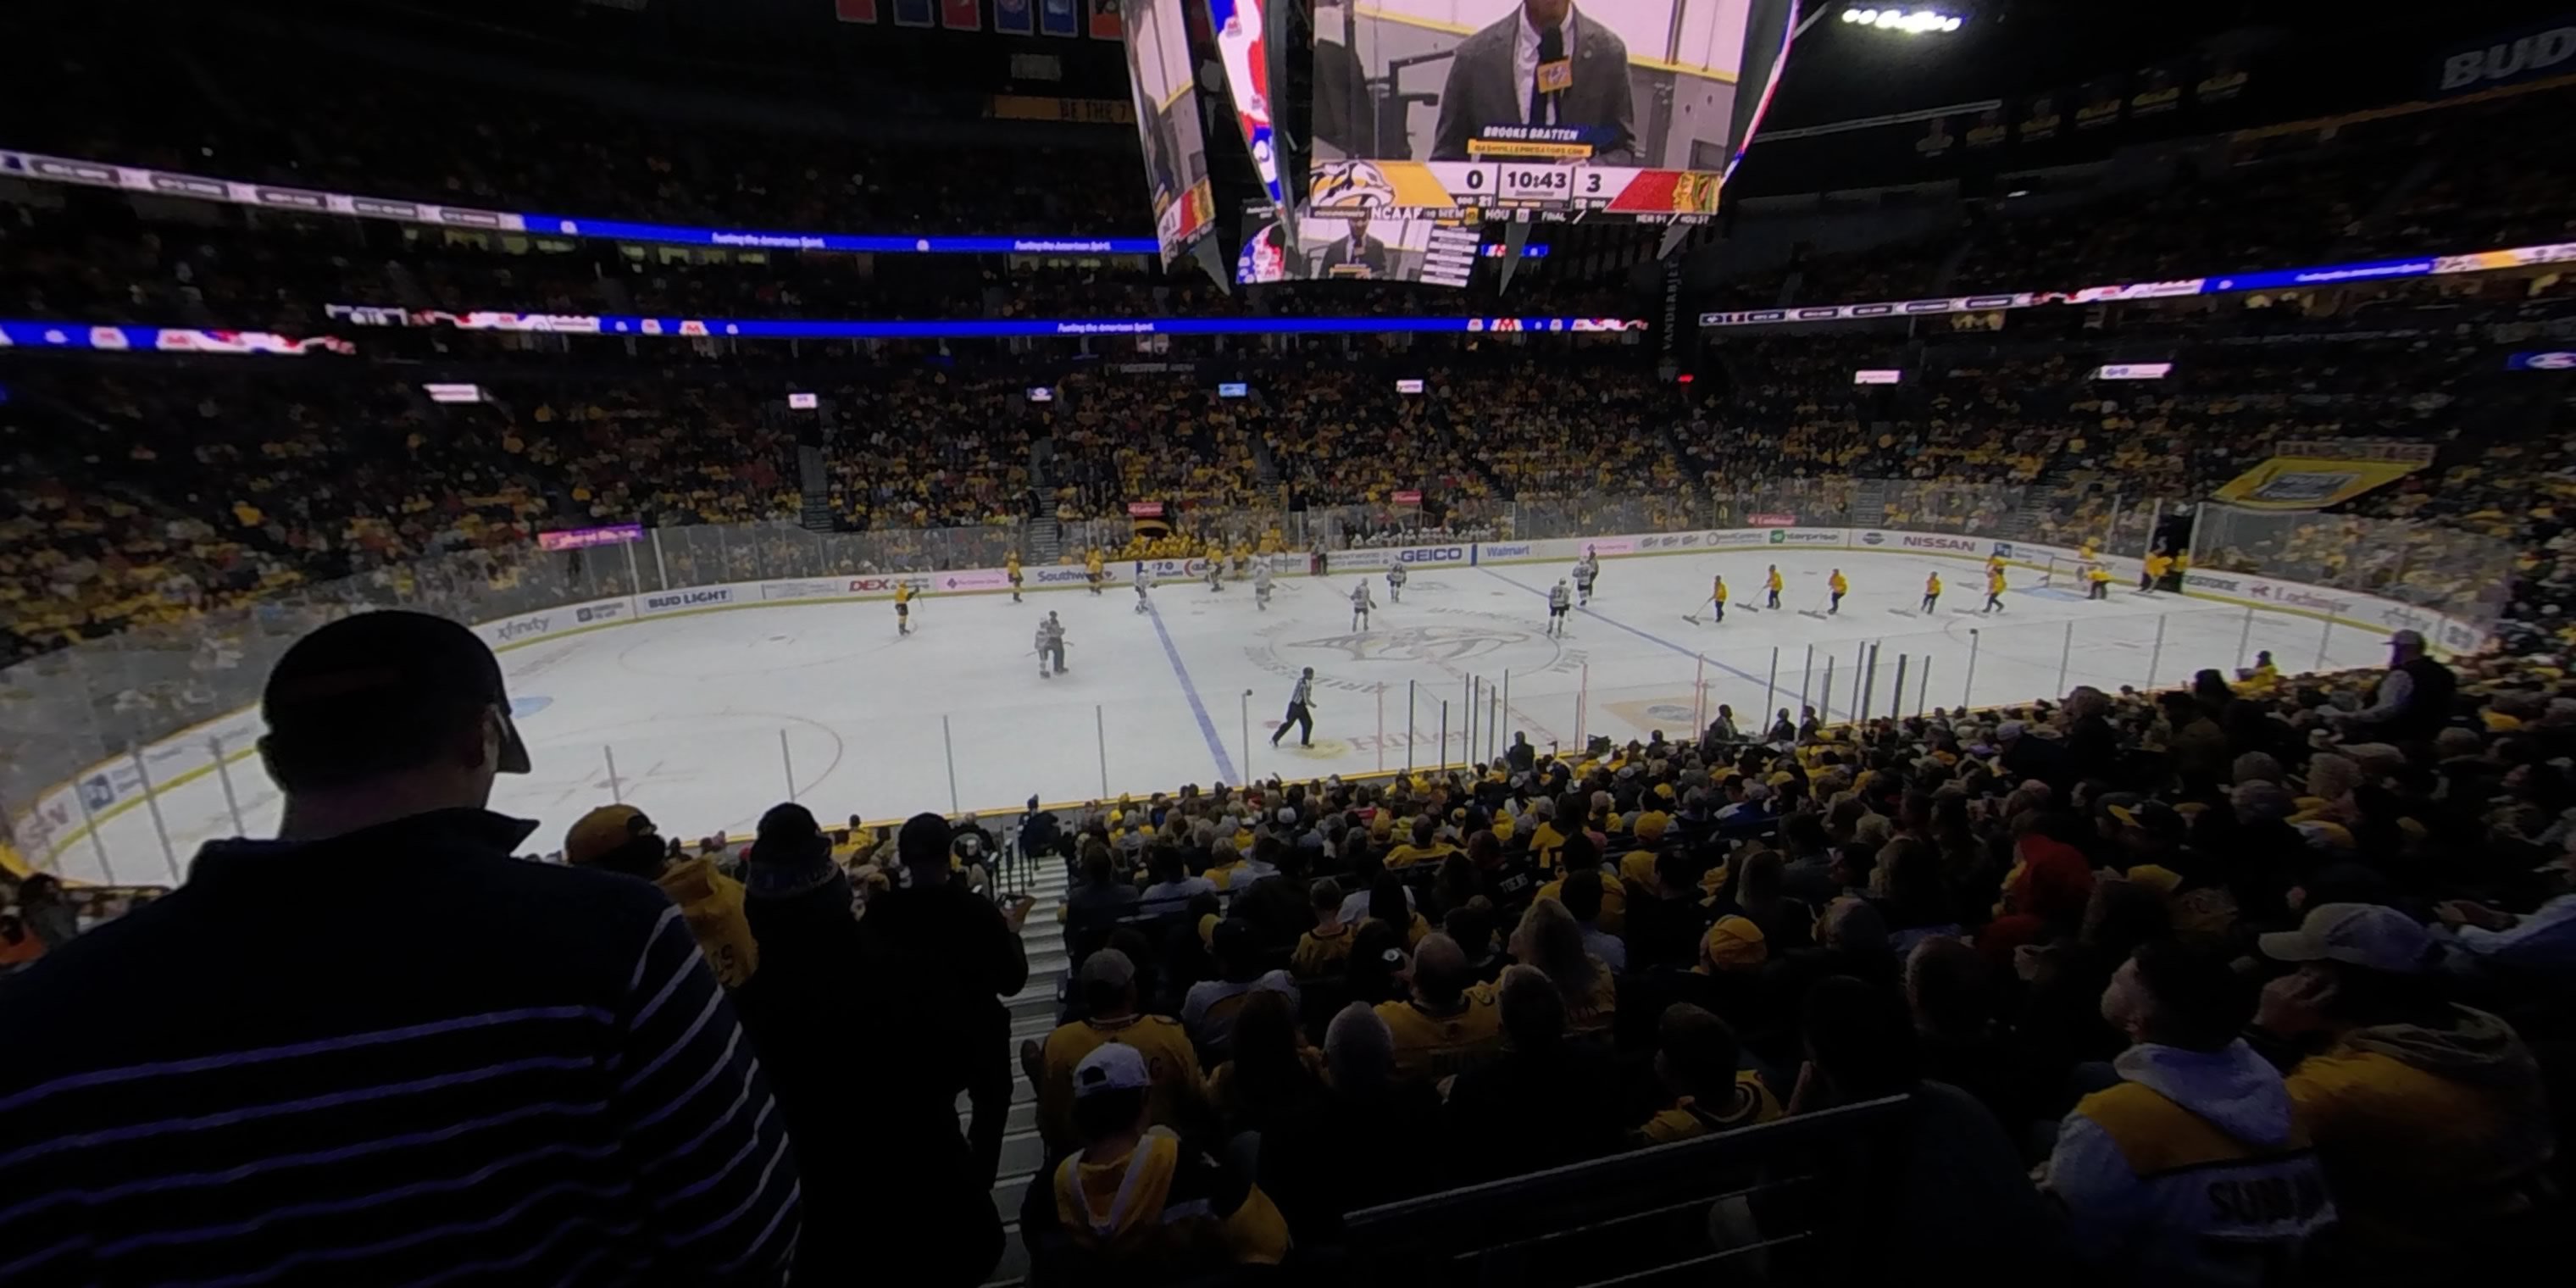 section 104 panoramic seat view  for hockey - bridgestone arena